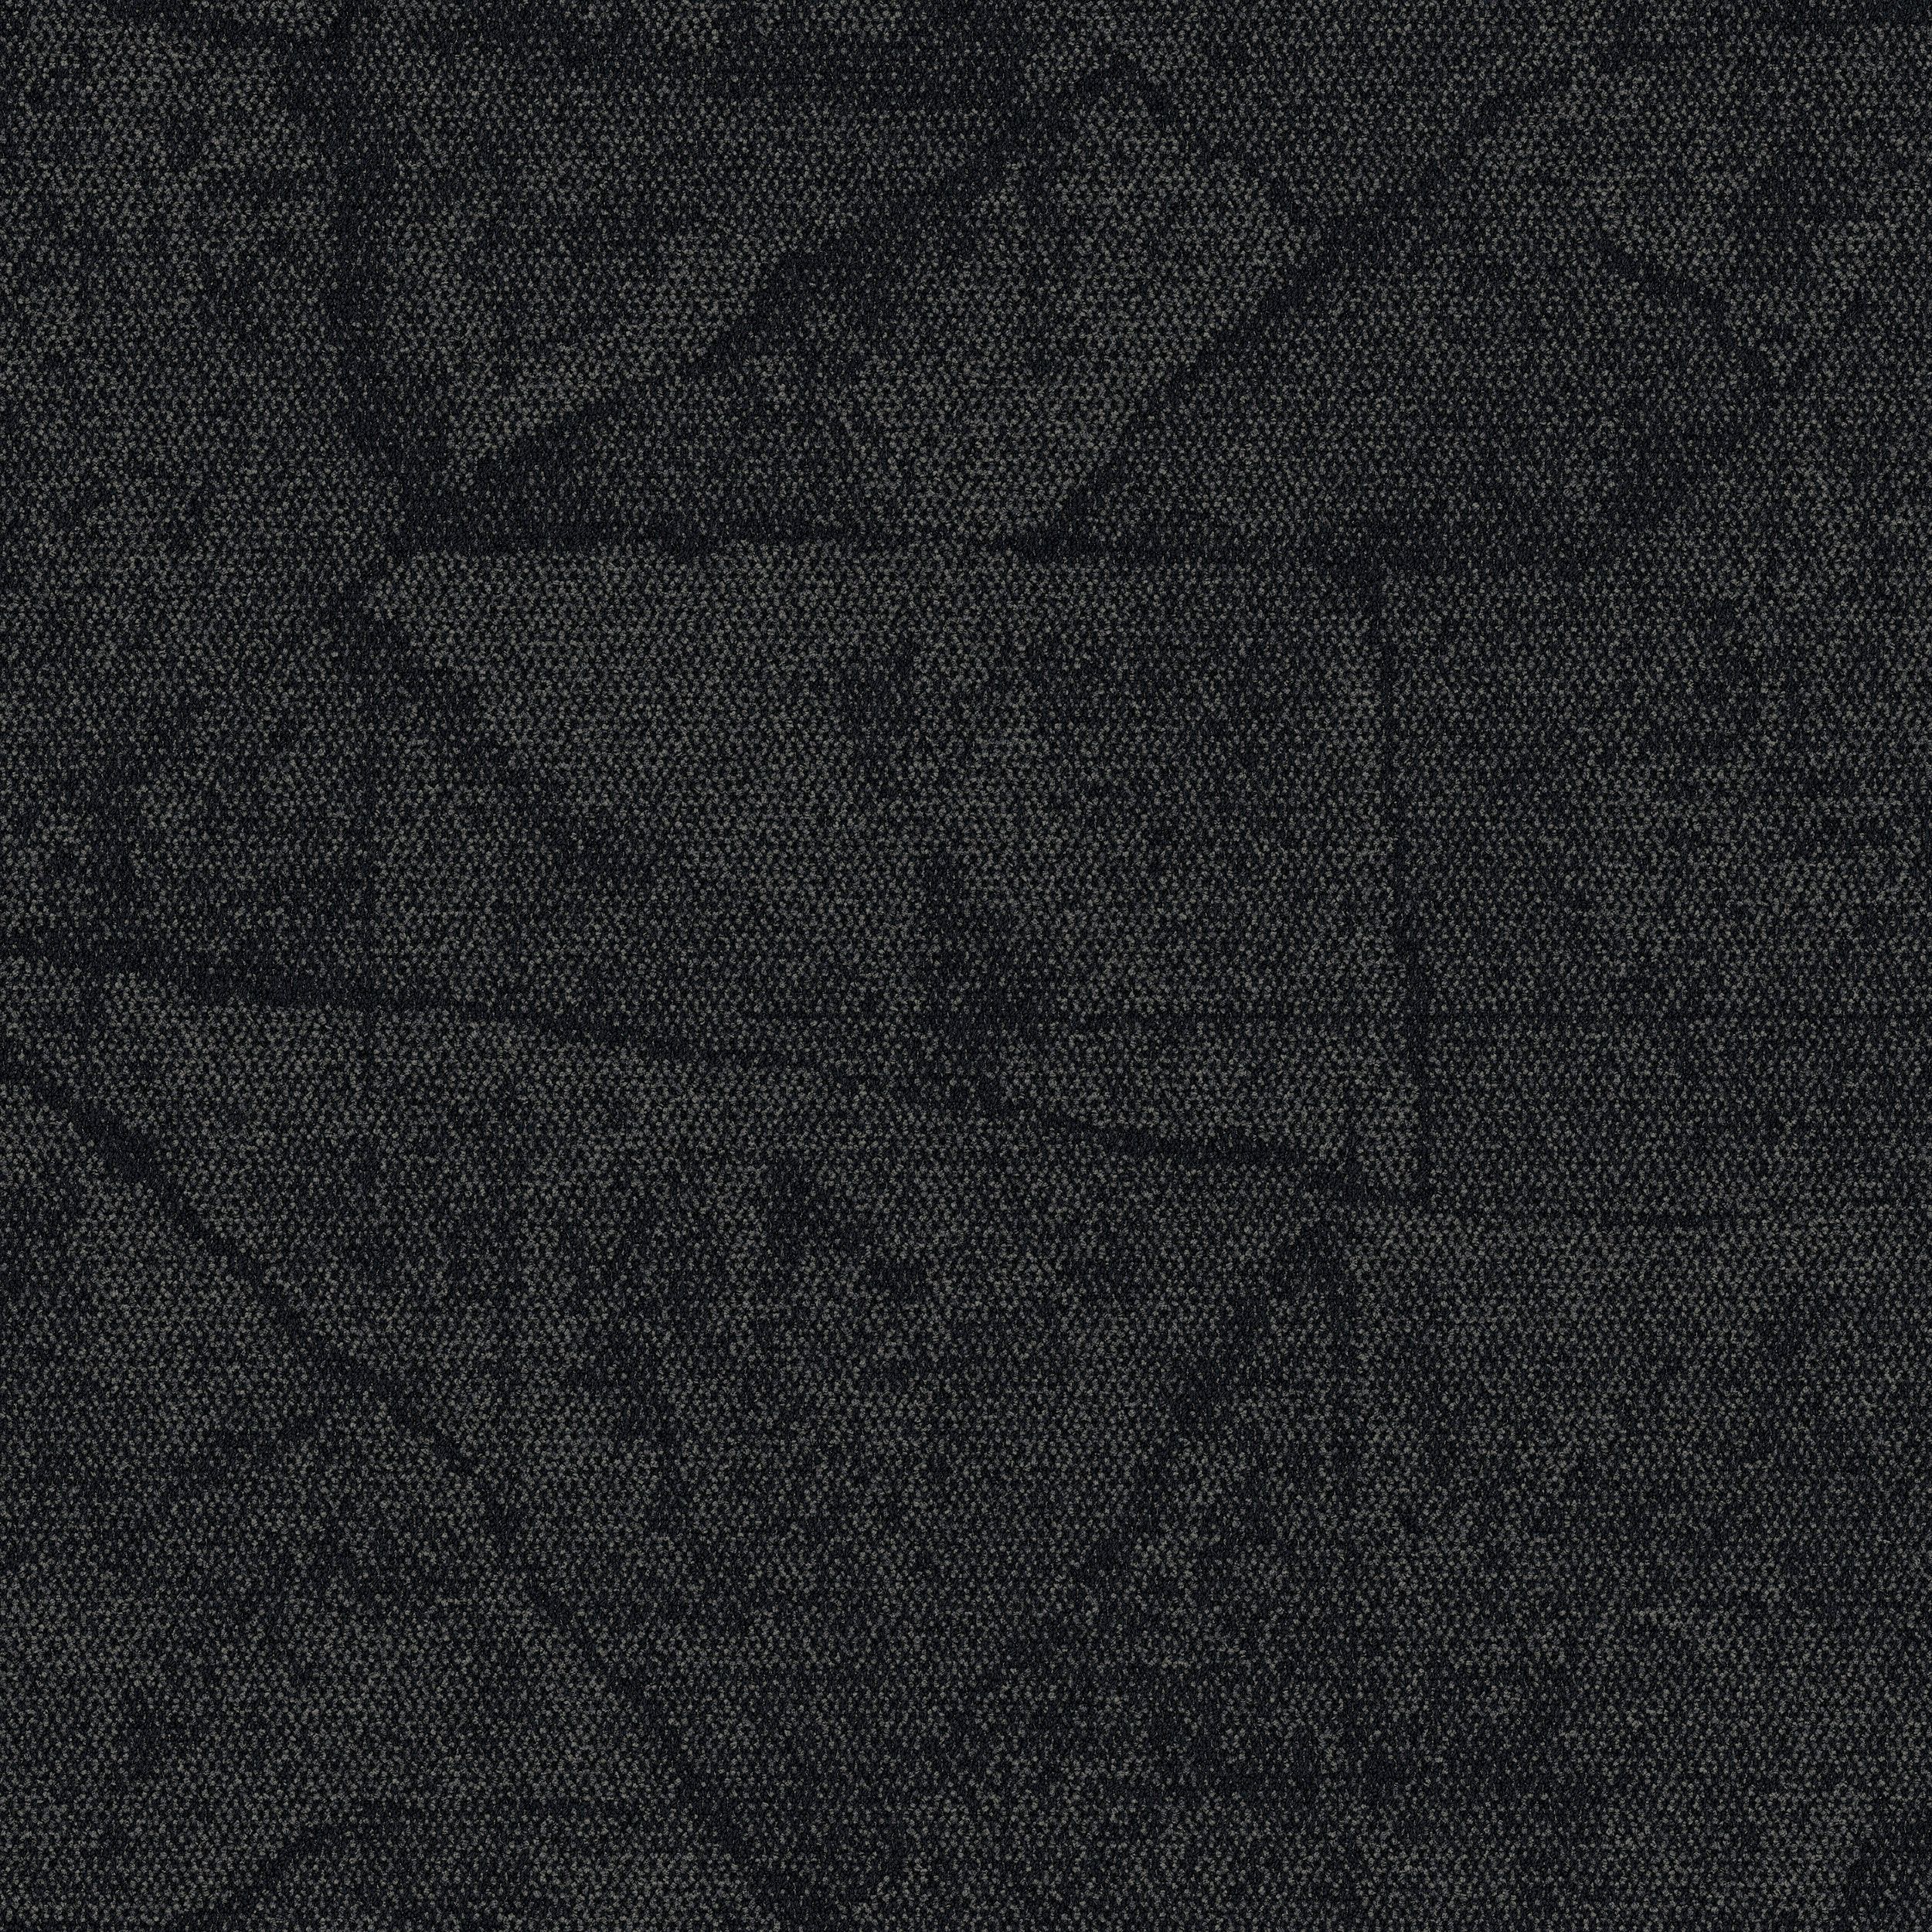 Cap Rock Carpet Tile in Ebony imagen número 2